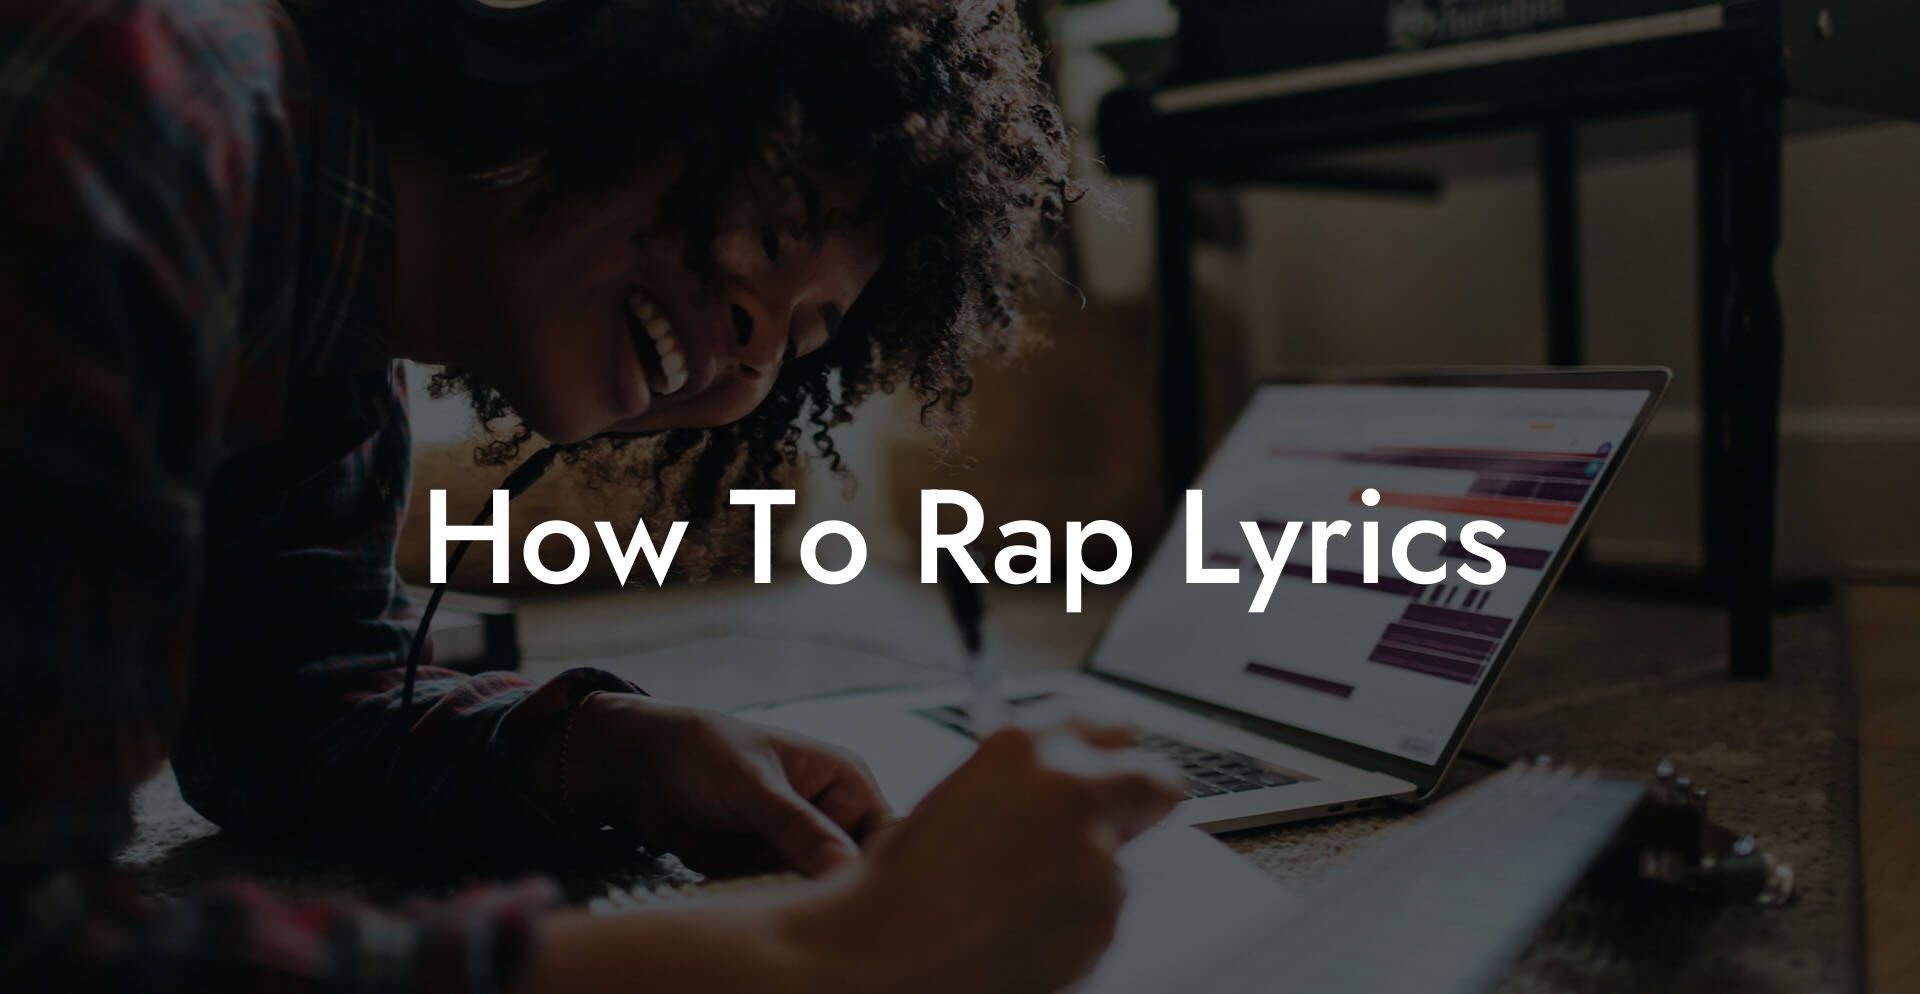 how to rap lyrics lyric assistant